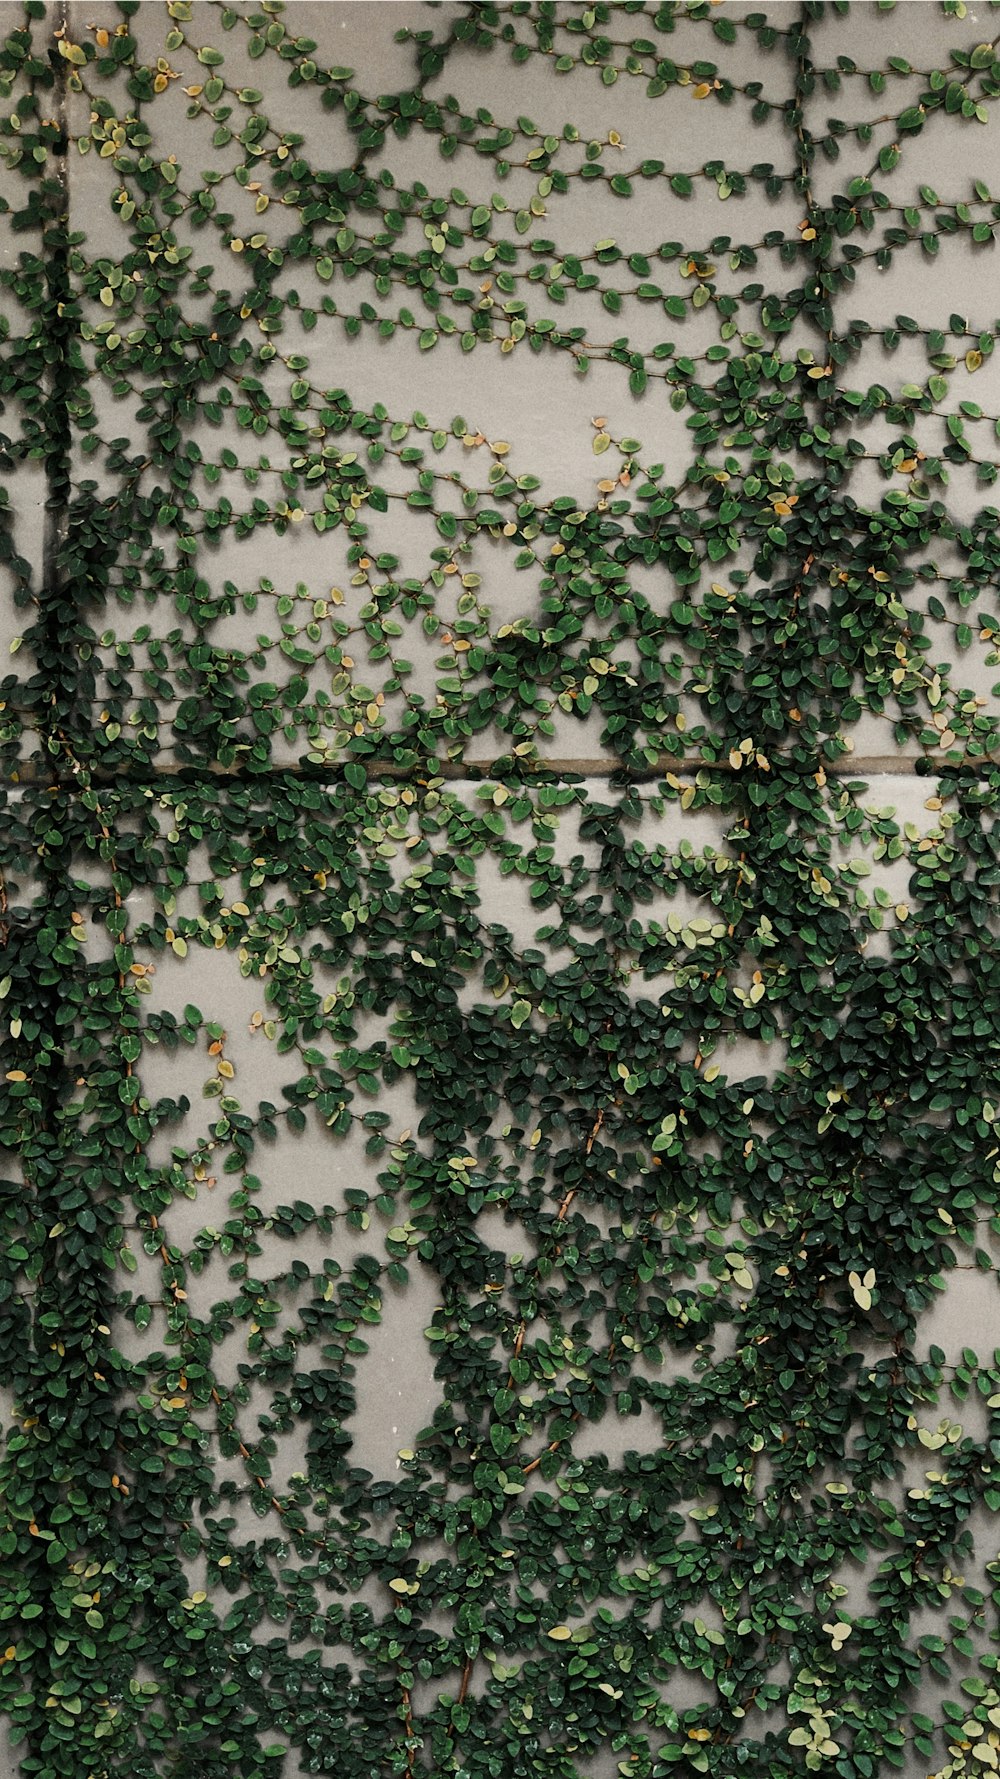 green leafed vines